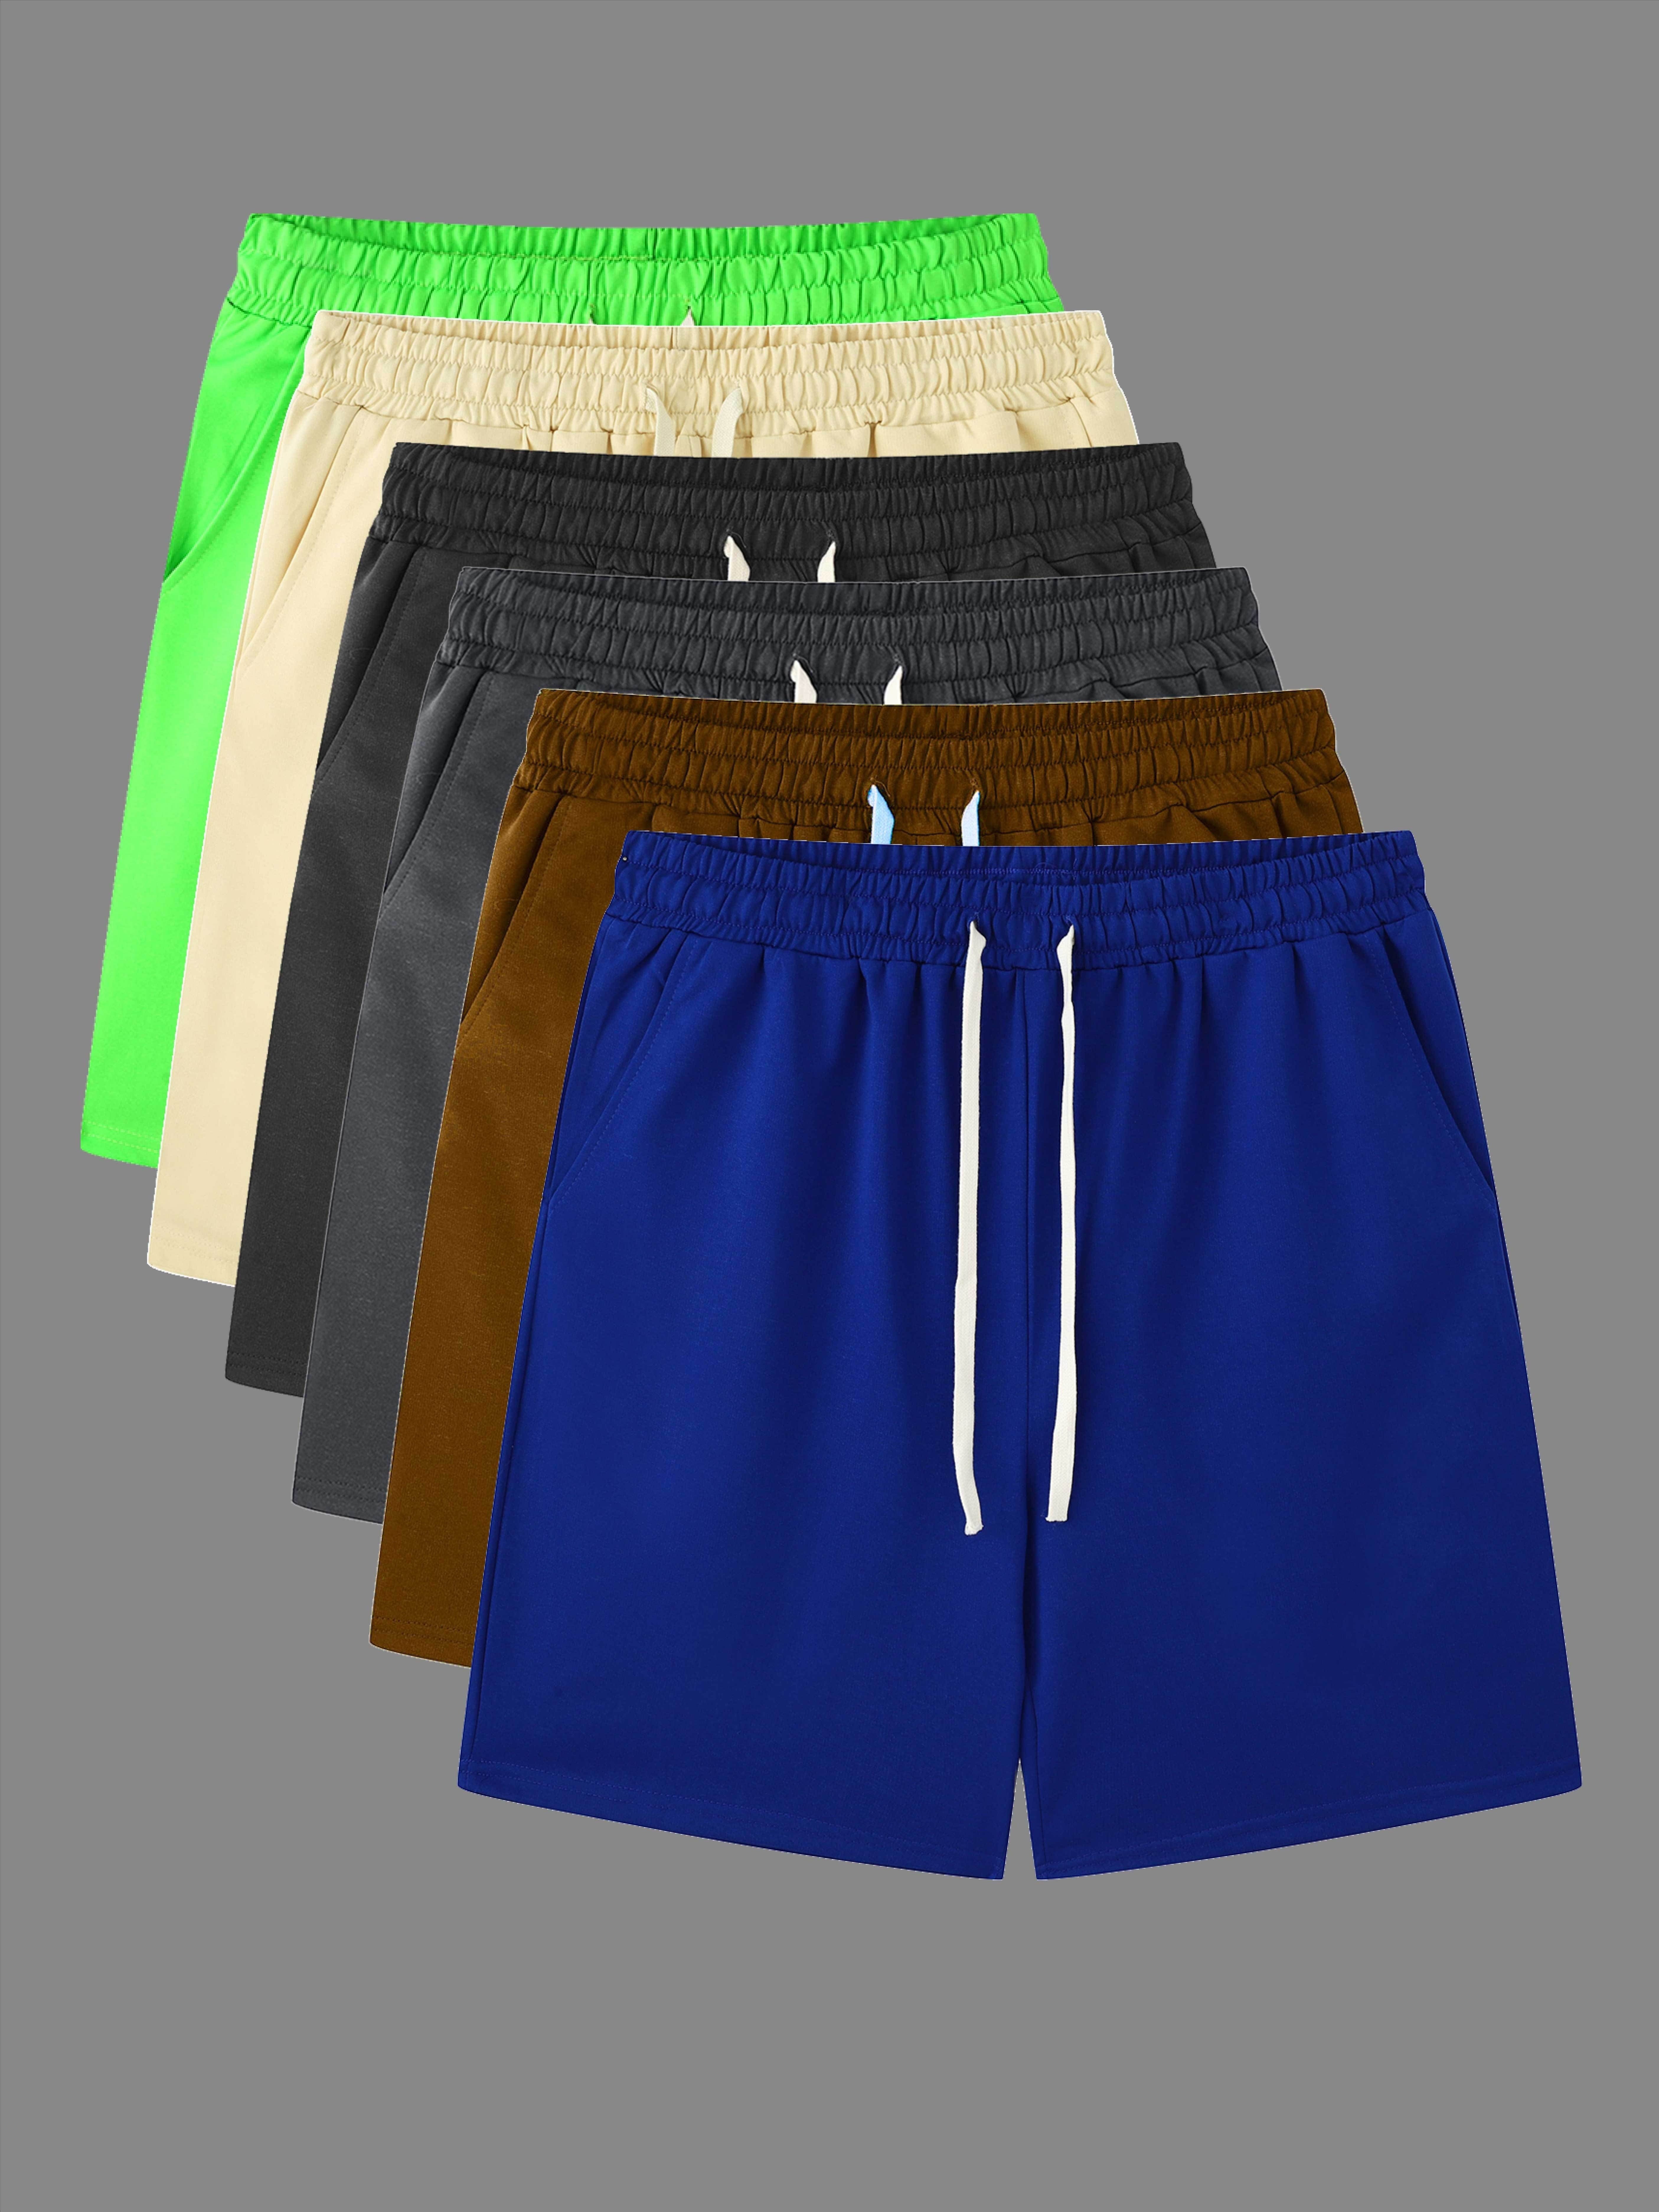 Men's Plain Casual Shorts, Street Style Drawstring Shorts